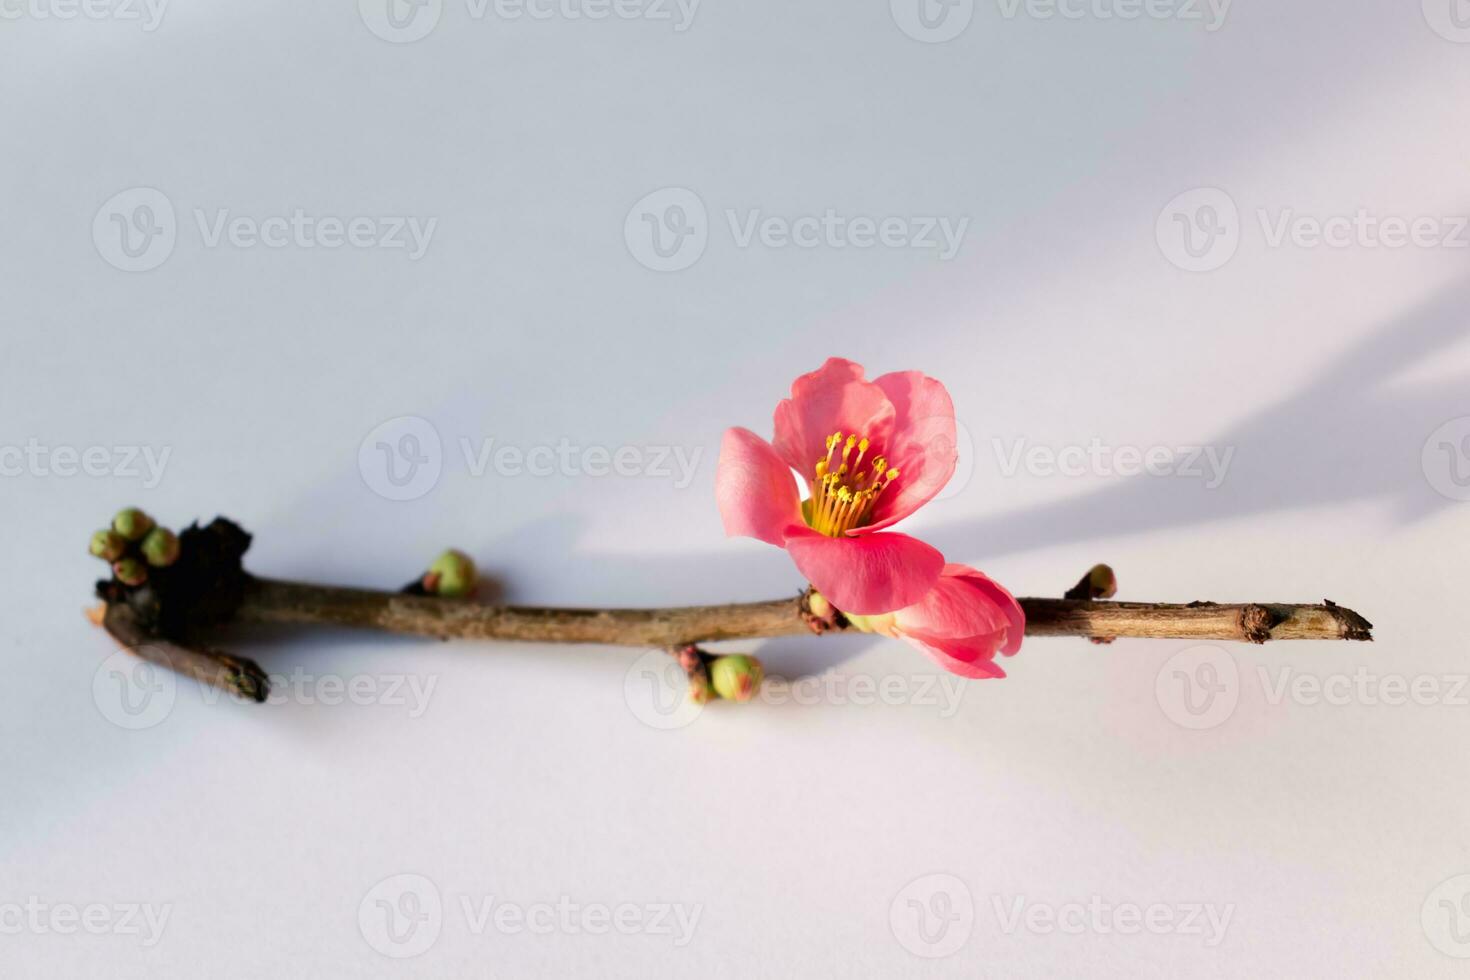 roze Japans kweepeer bloesem en tak, chaenomeles japonica, malus floribunda foto